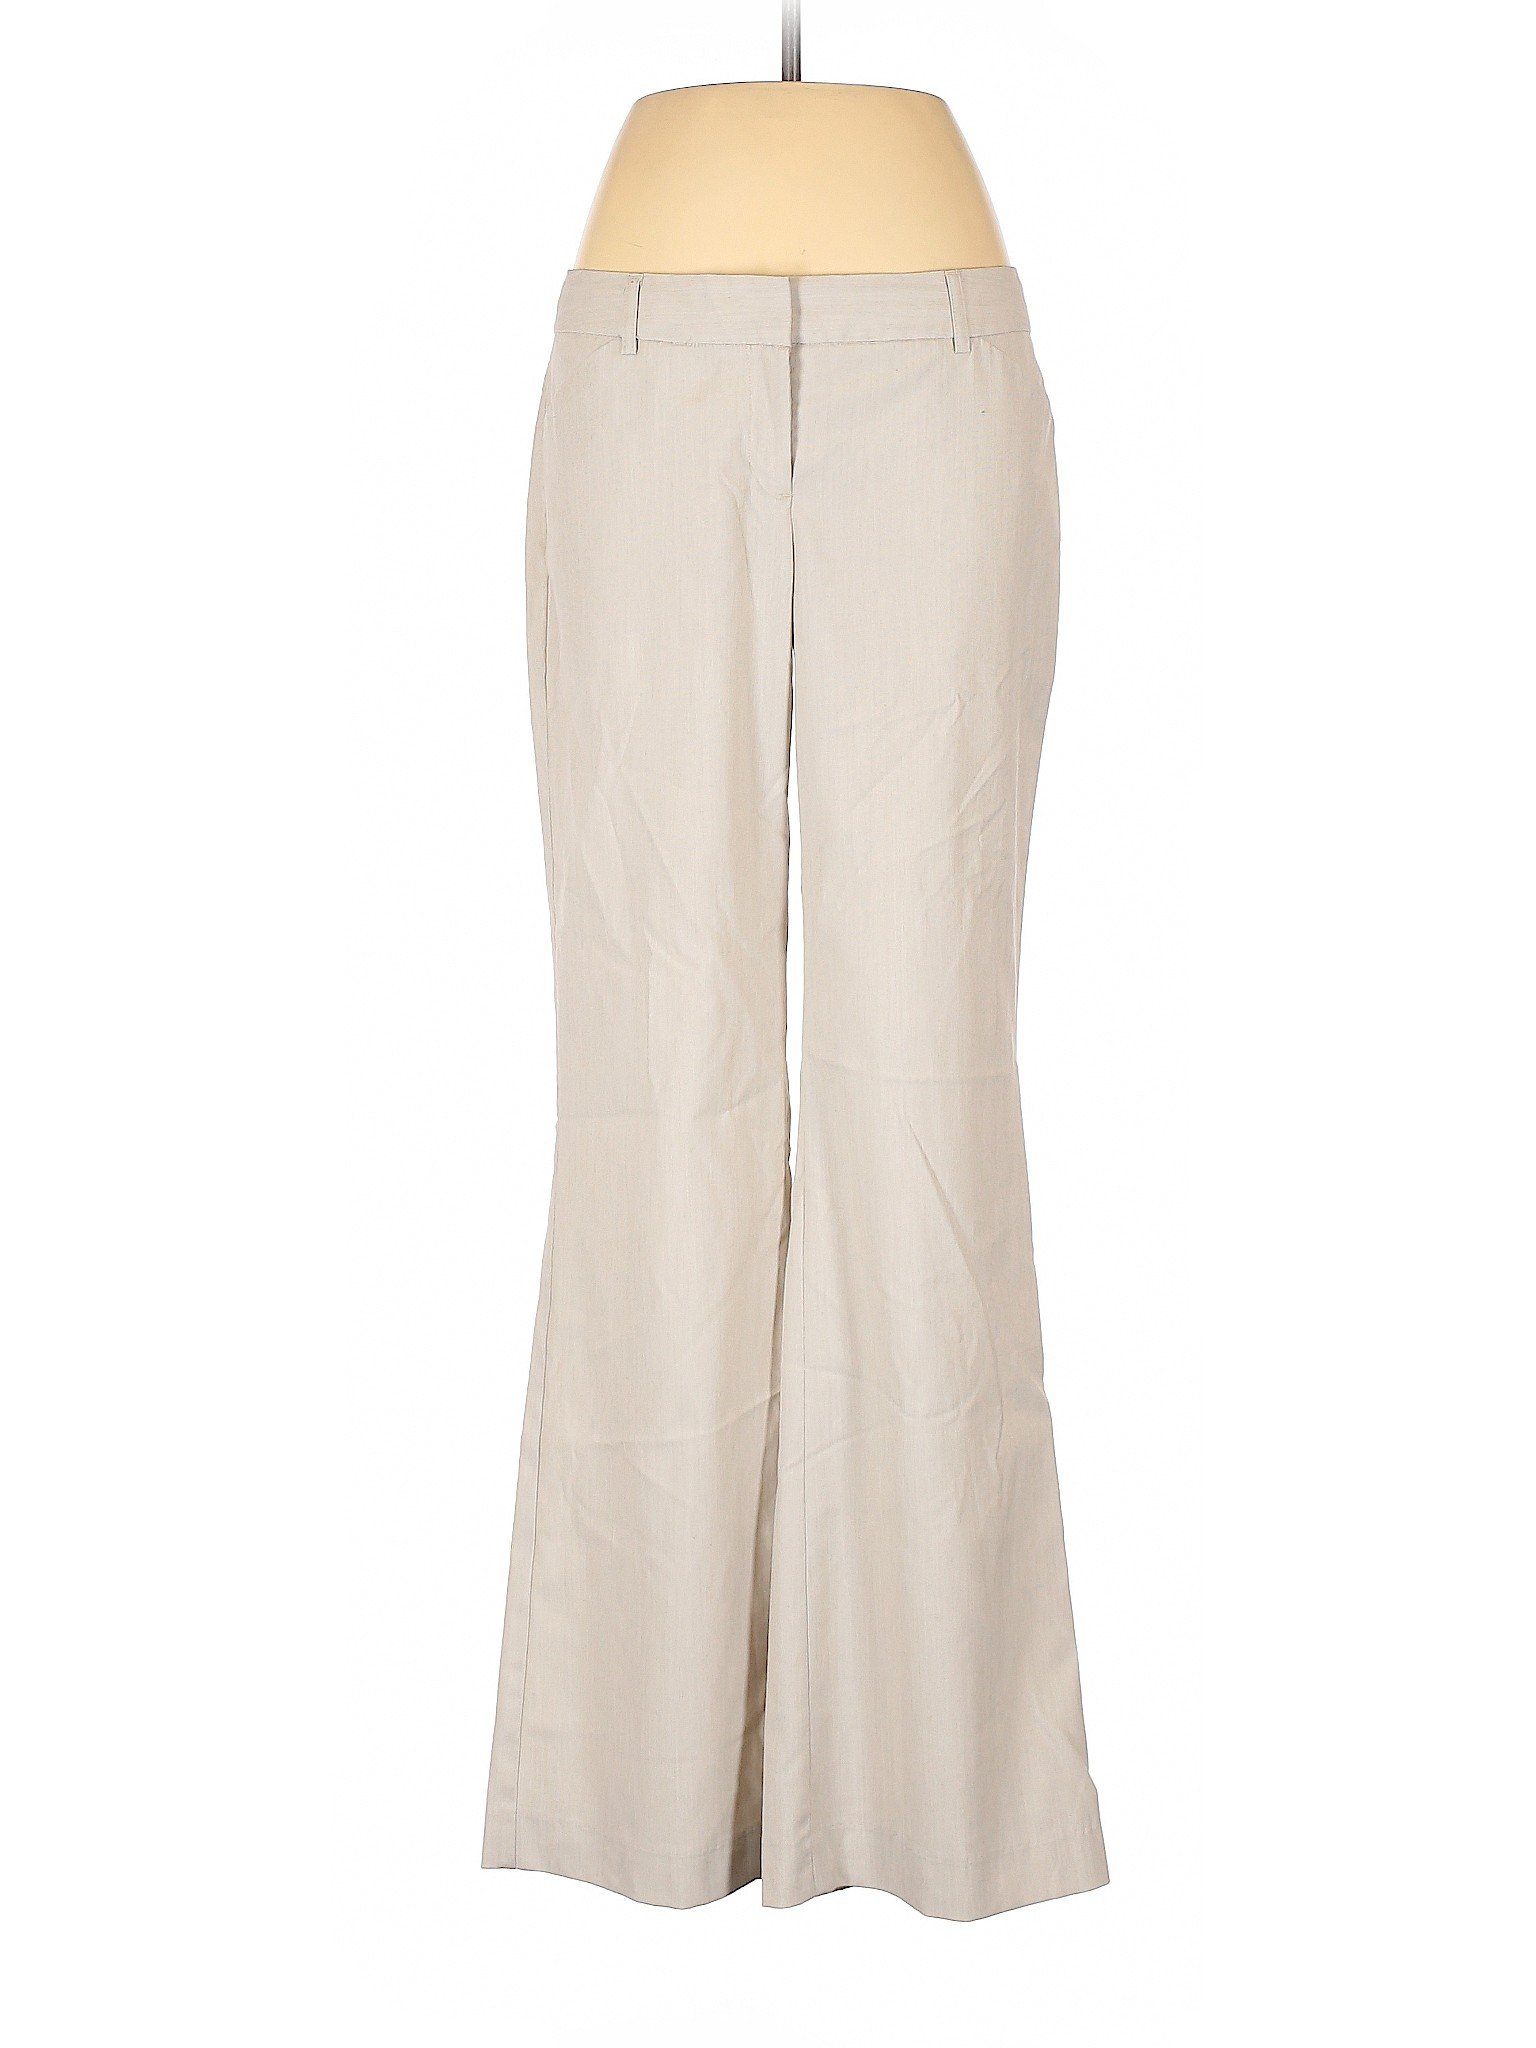 Express Design Studio Women Ivory Dress Pants 8 | eBay